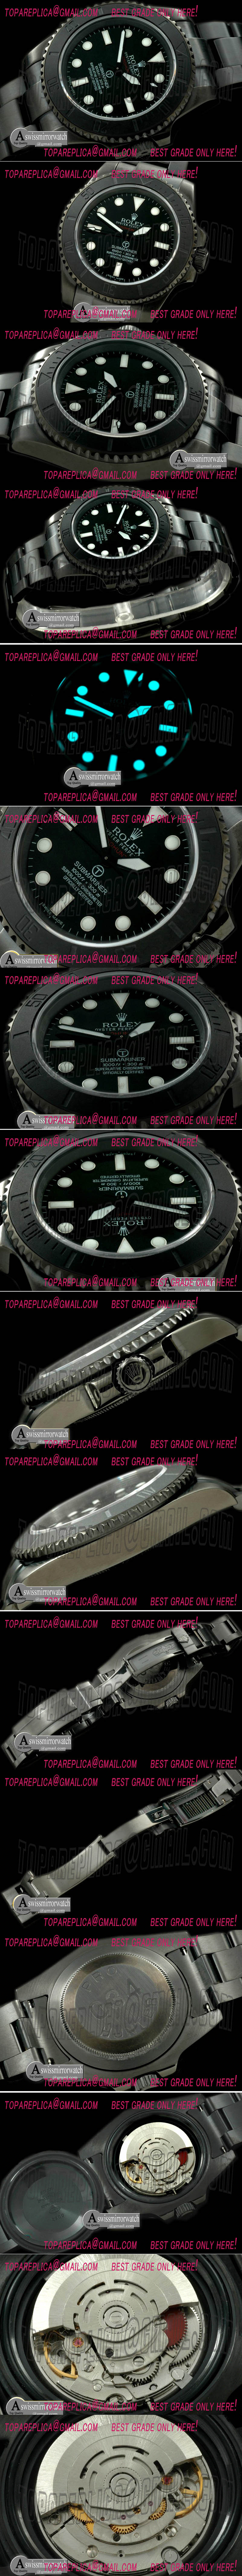 Replica Rolex Submariner Watches